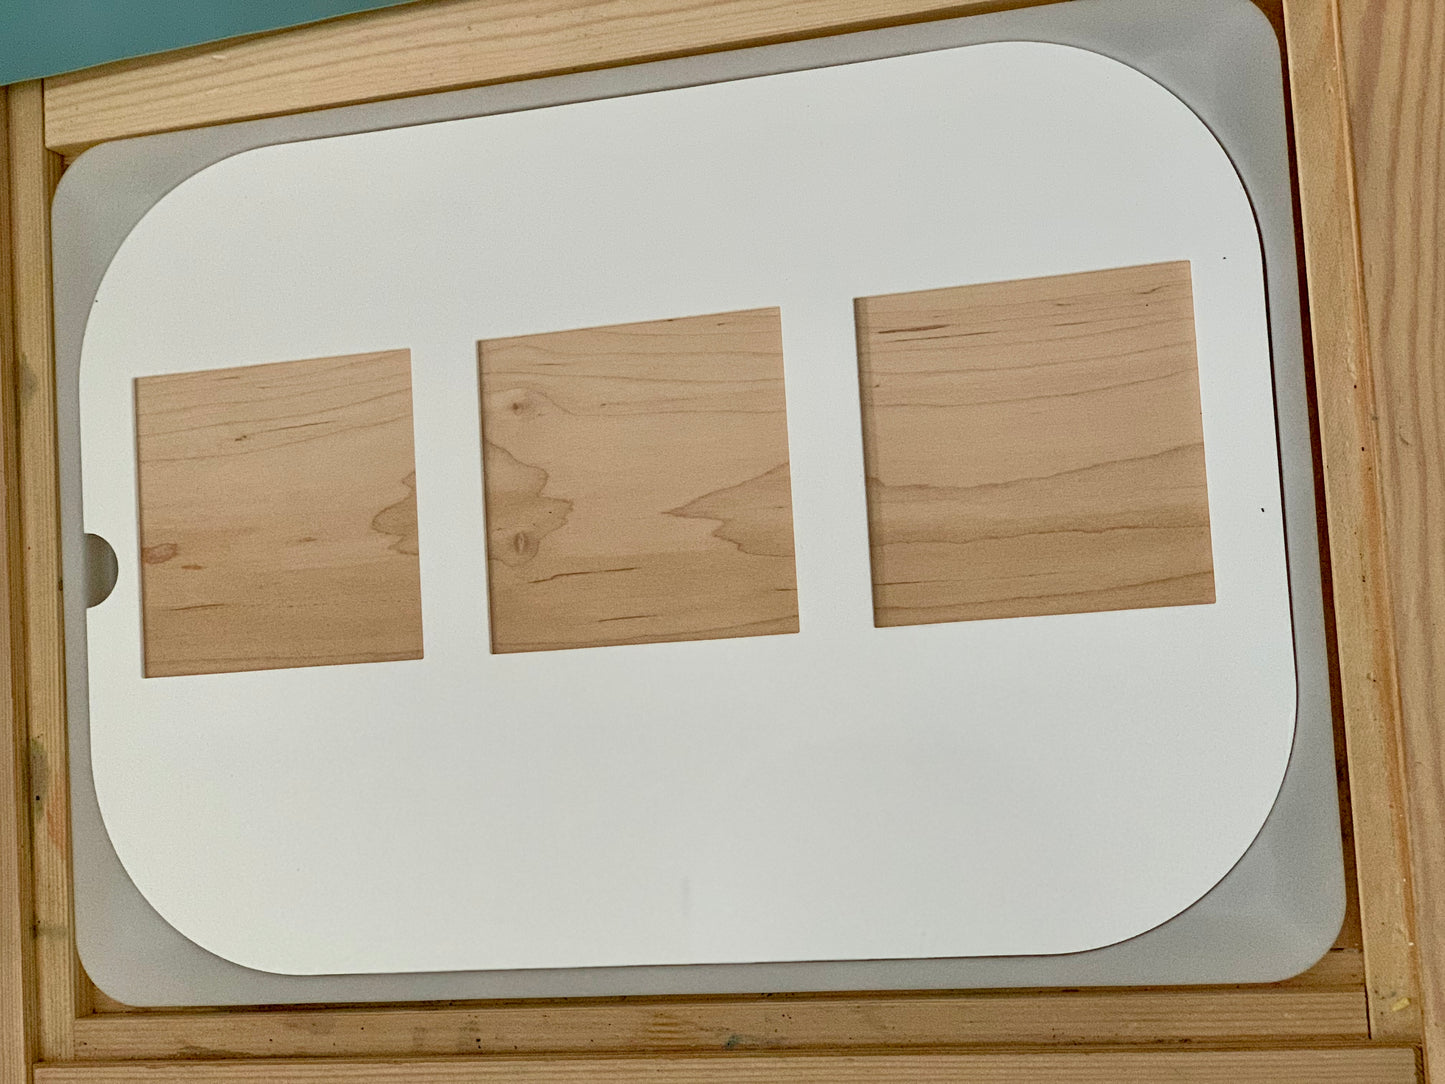 Flisat Table Top Insert for Base 10 Blocks, White Acrylic is Dry Erasable, Double Sided - Plain Wood on Opposite Side